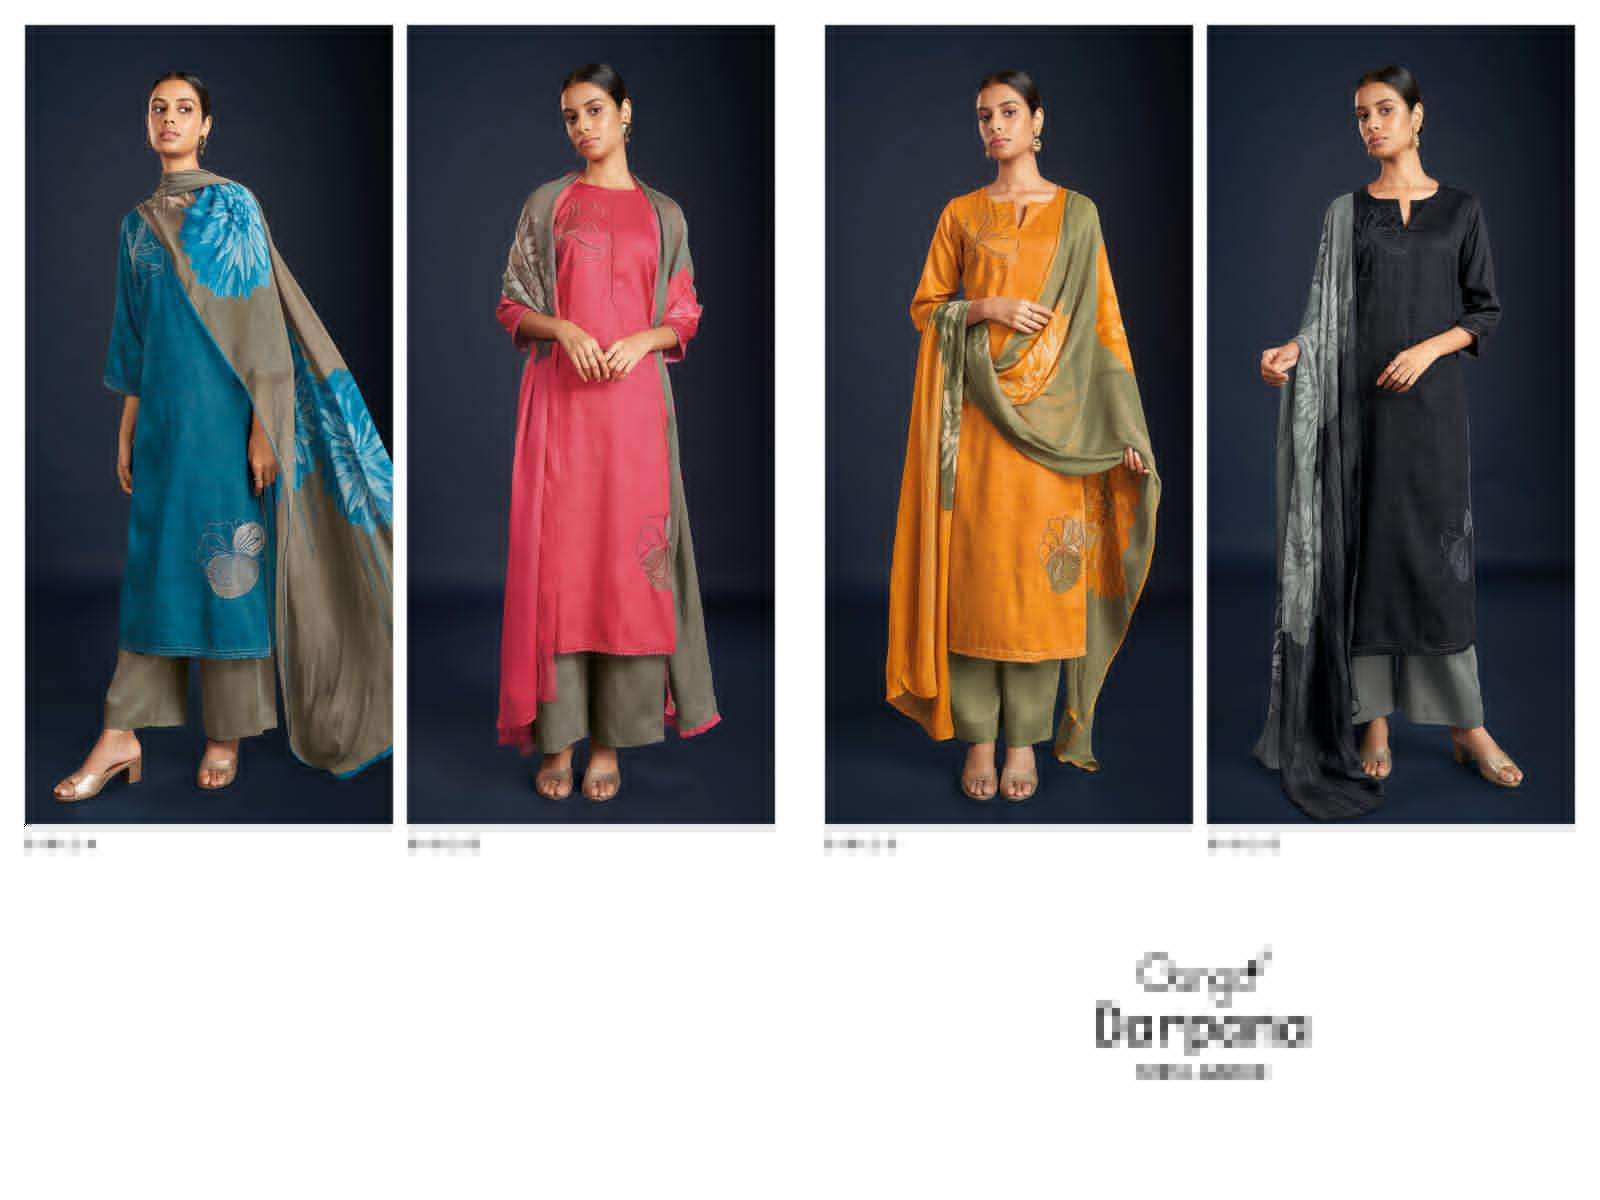 ganga darpana 1912 colour latest designer wedding wear pakistani suit wholesaler surat gujarat